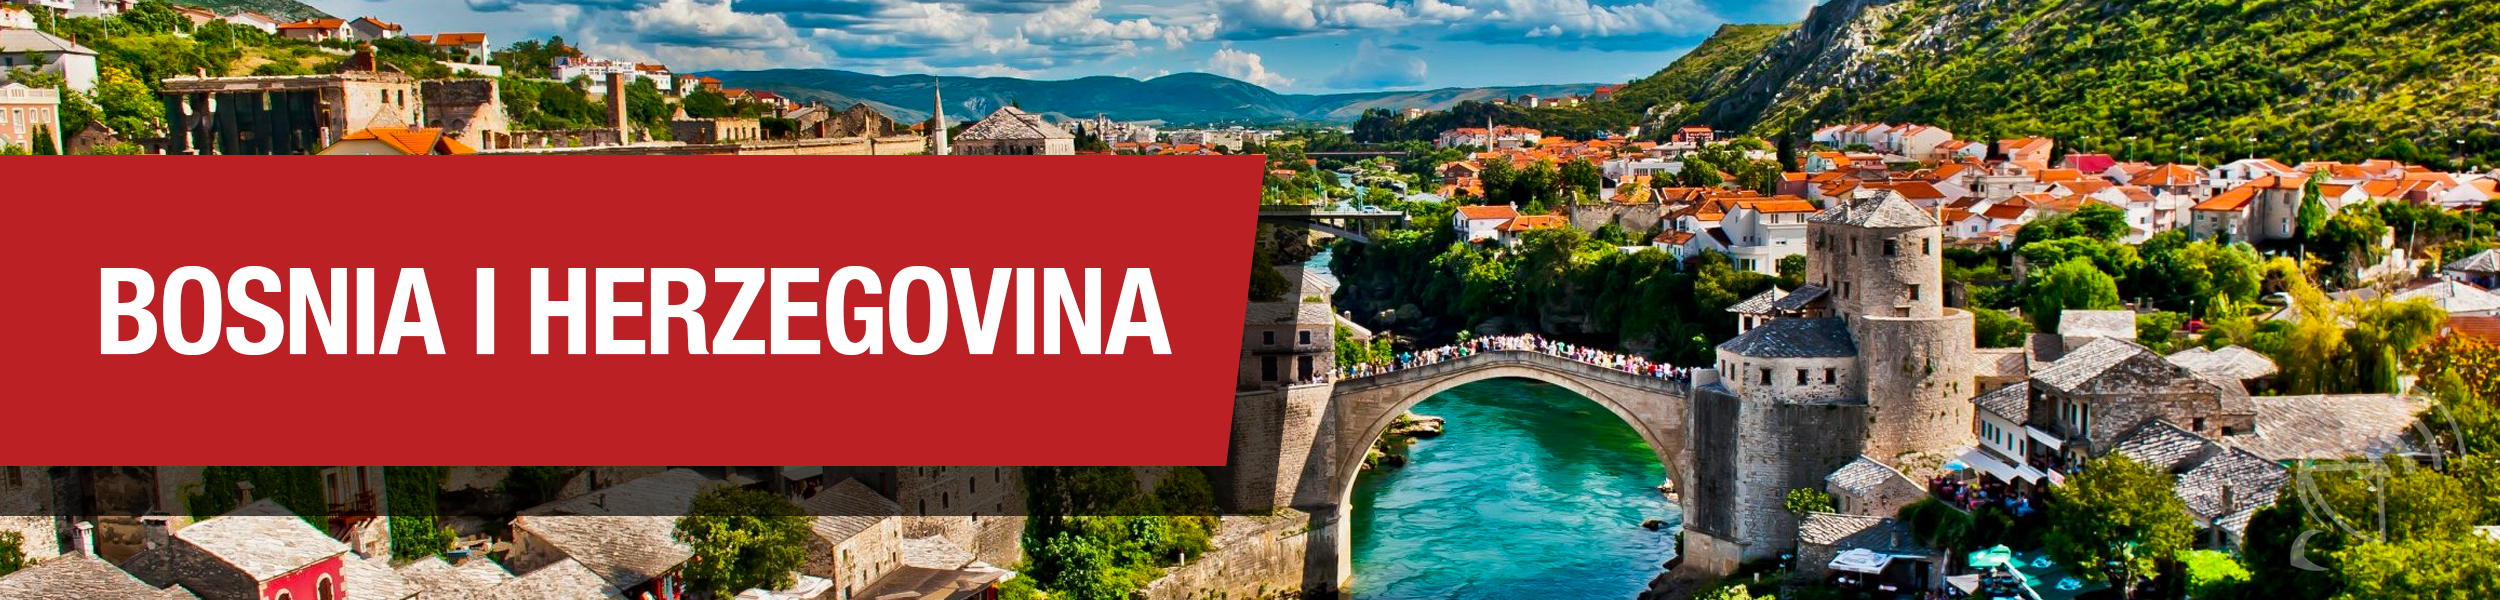 Bosnia i Herzegovina